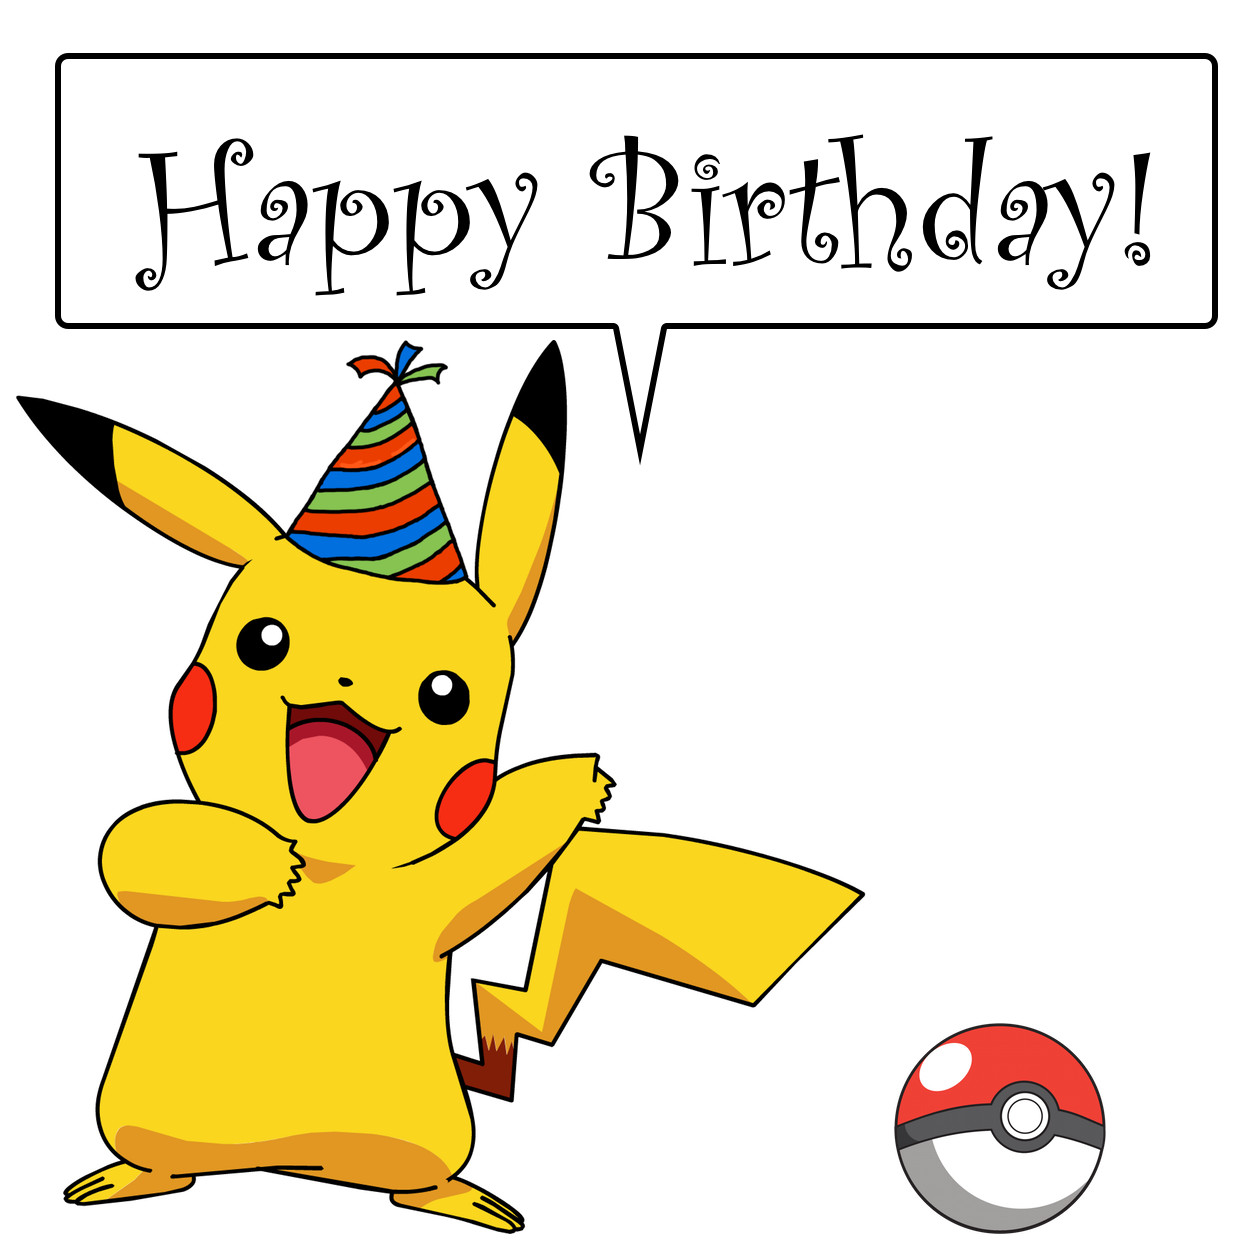 Pikachu Birthday Card
 The Big 1 0